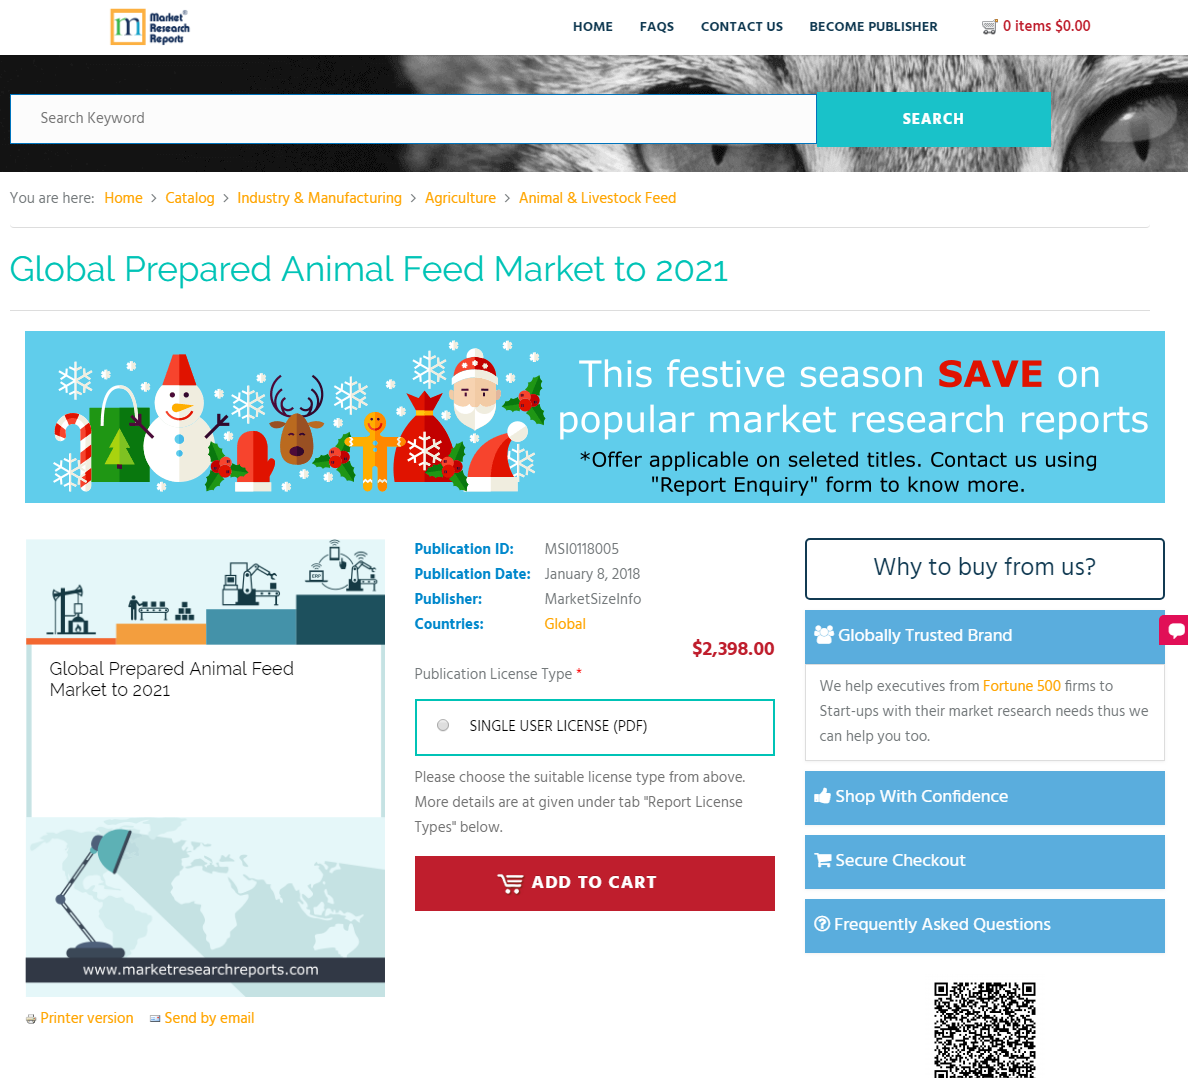 Global Prepared Animal Feed Market to 2021